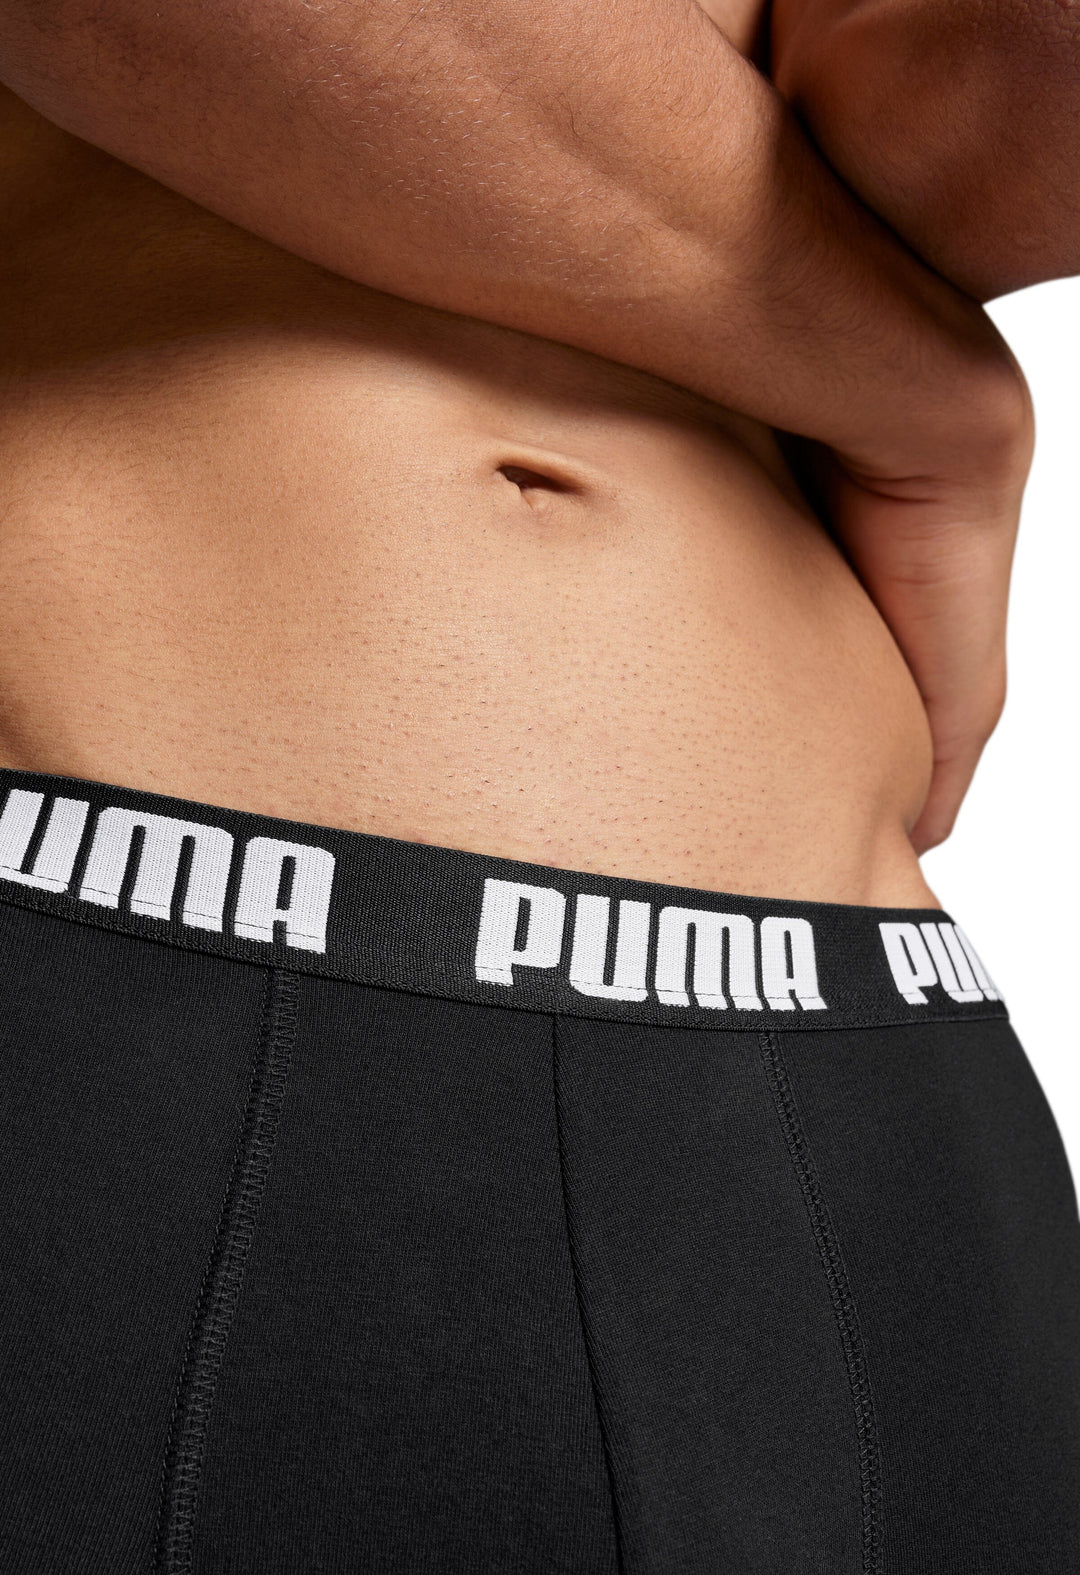 Puma - Everyday Boxer 3-pack - 701206546 - 001 Black Boxershort Puma 